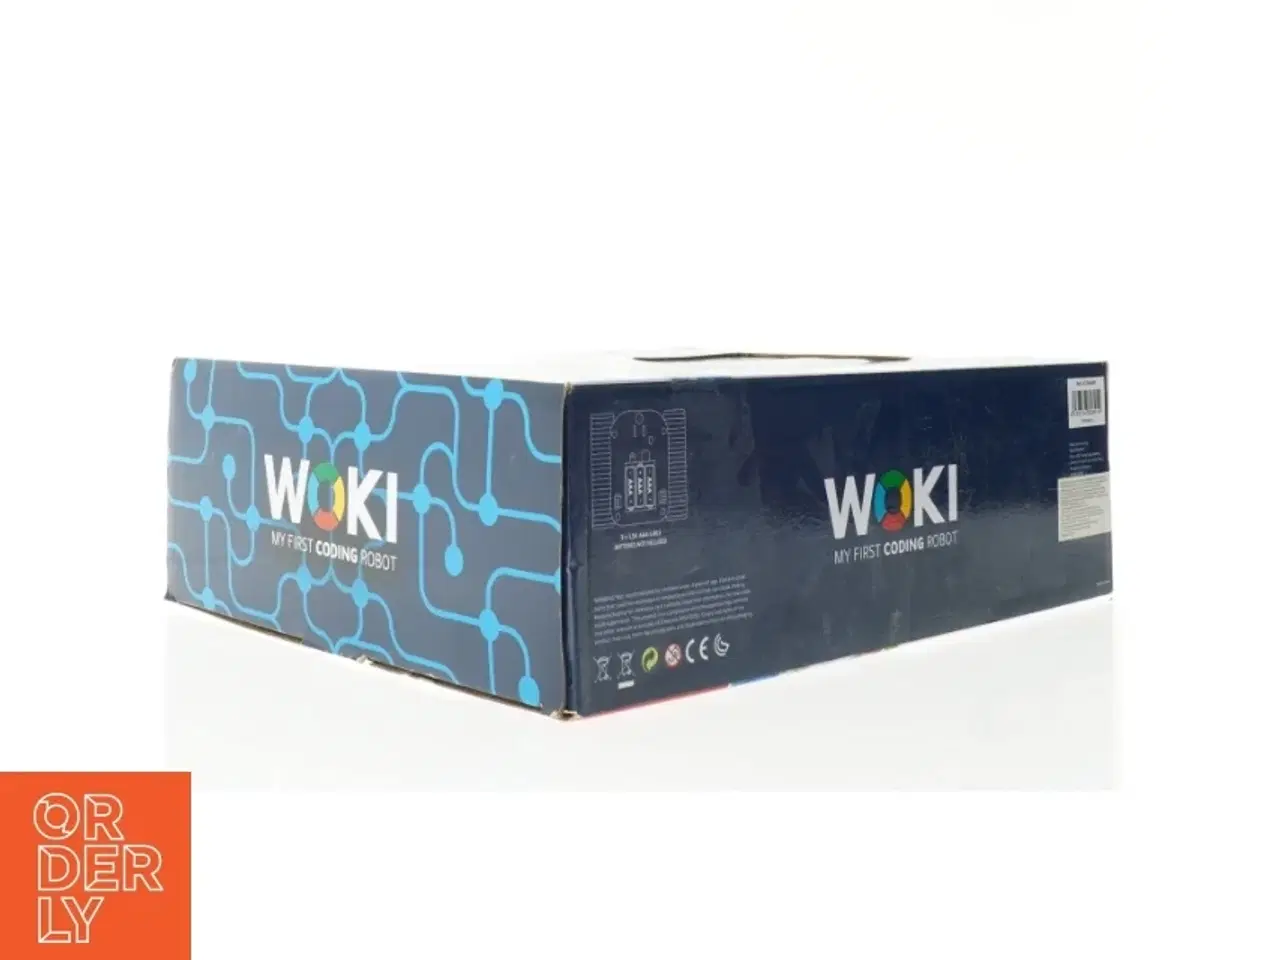 Billede 3 - Woki Min Første Kodningsrobot fra Woki (str. Bil 11 x 11 x 10 cm)